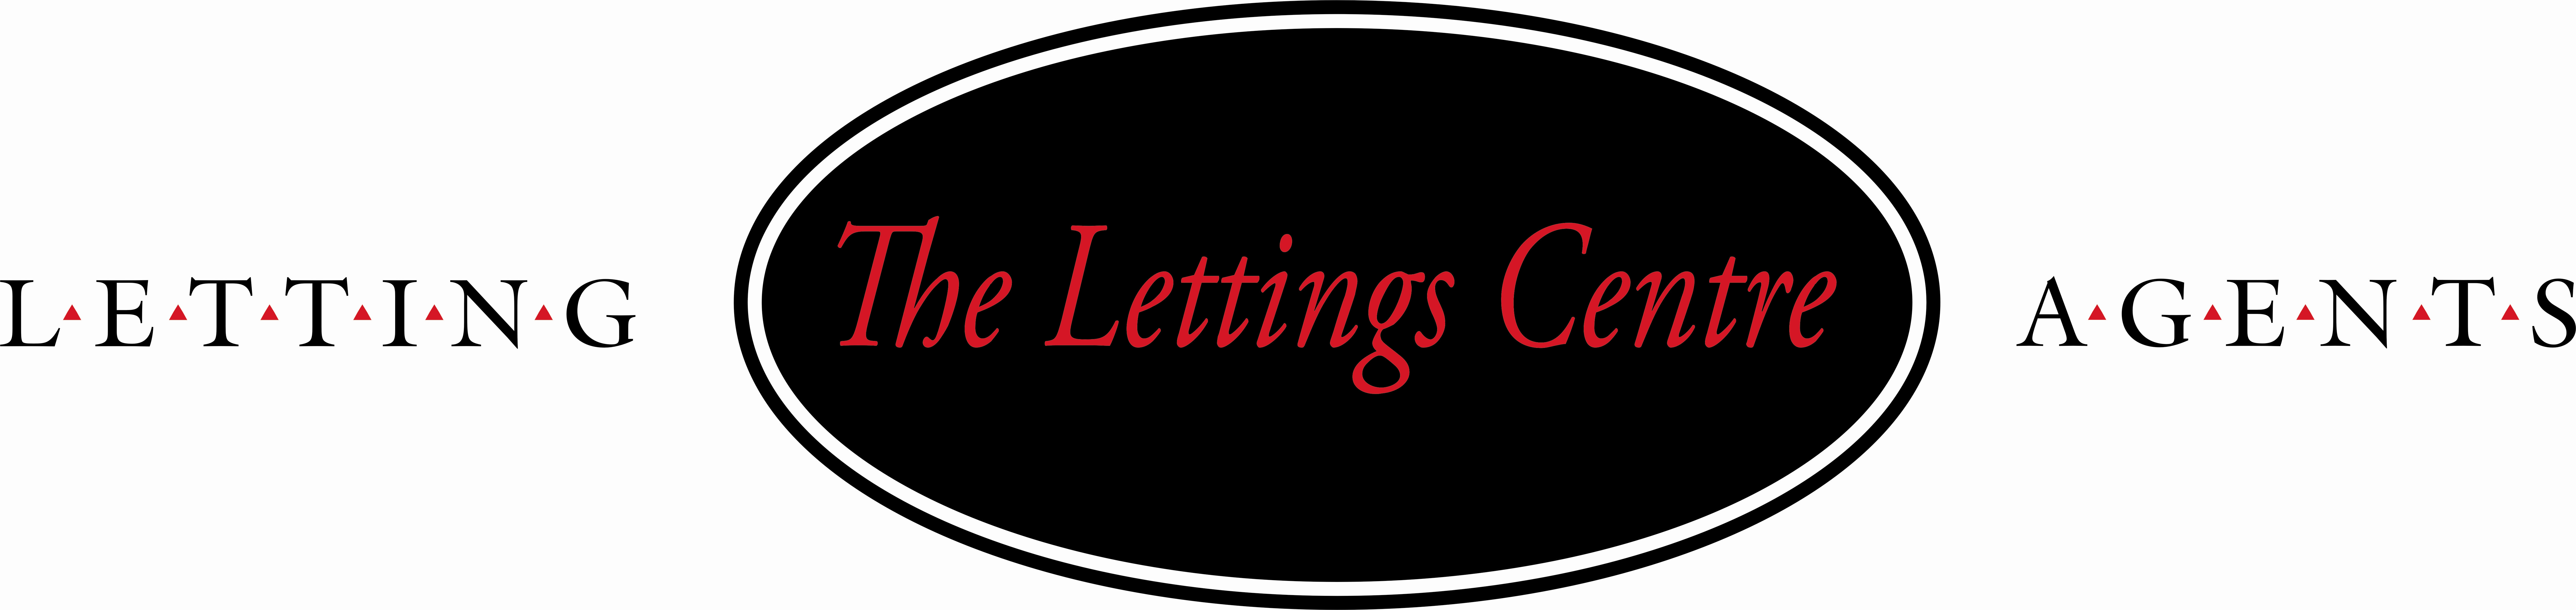 The Lettings Centre Ltd Logo